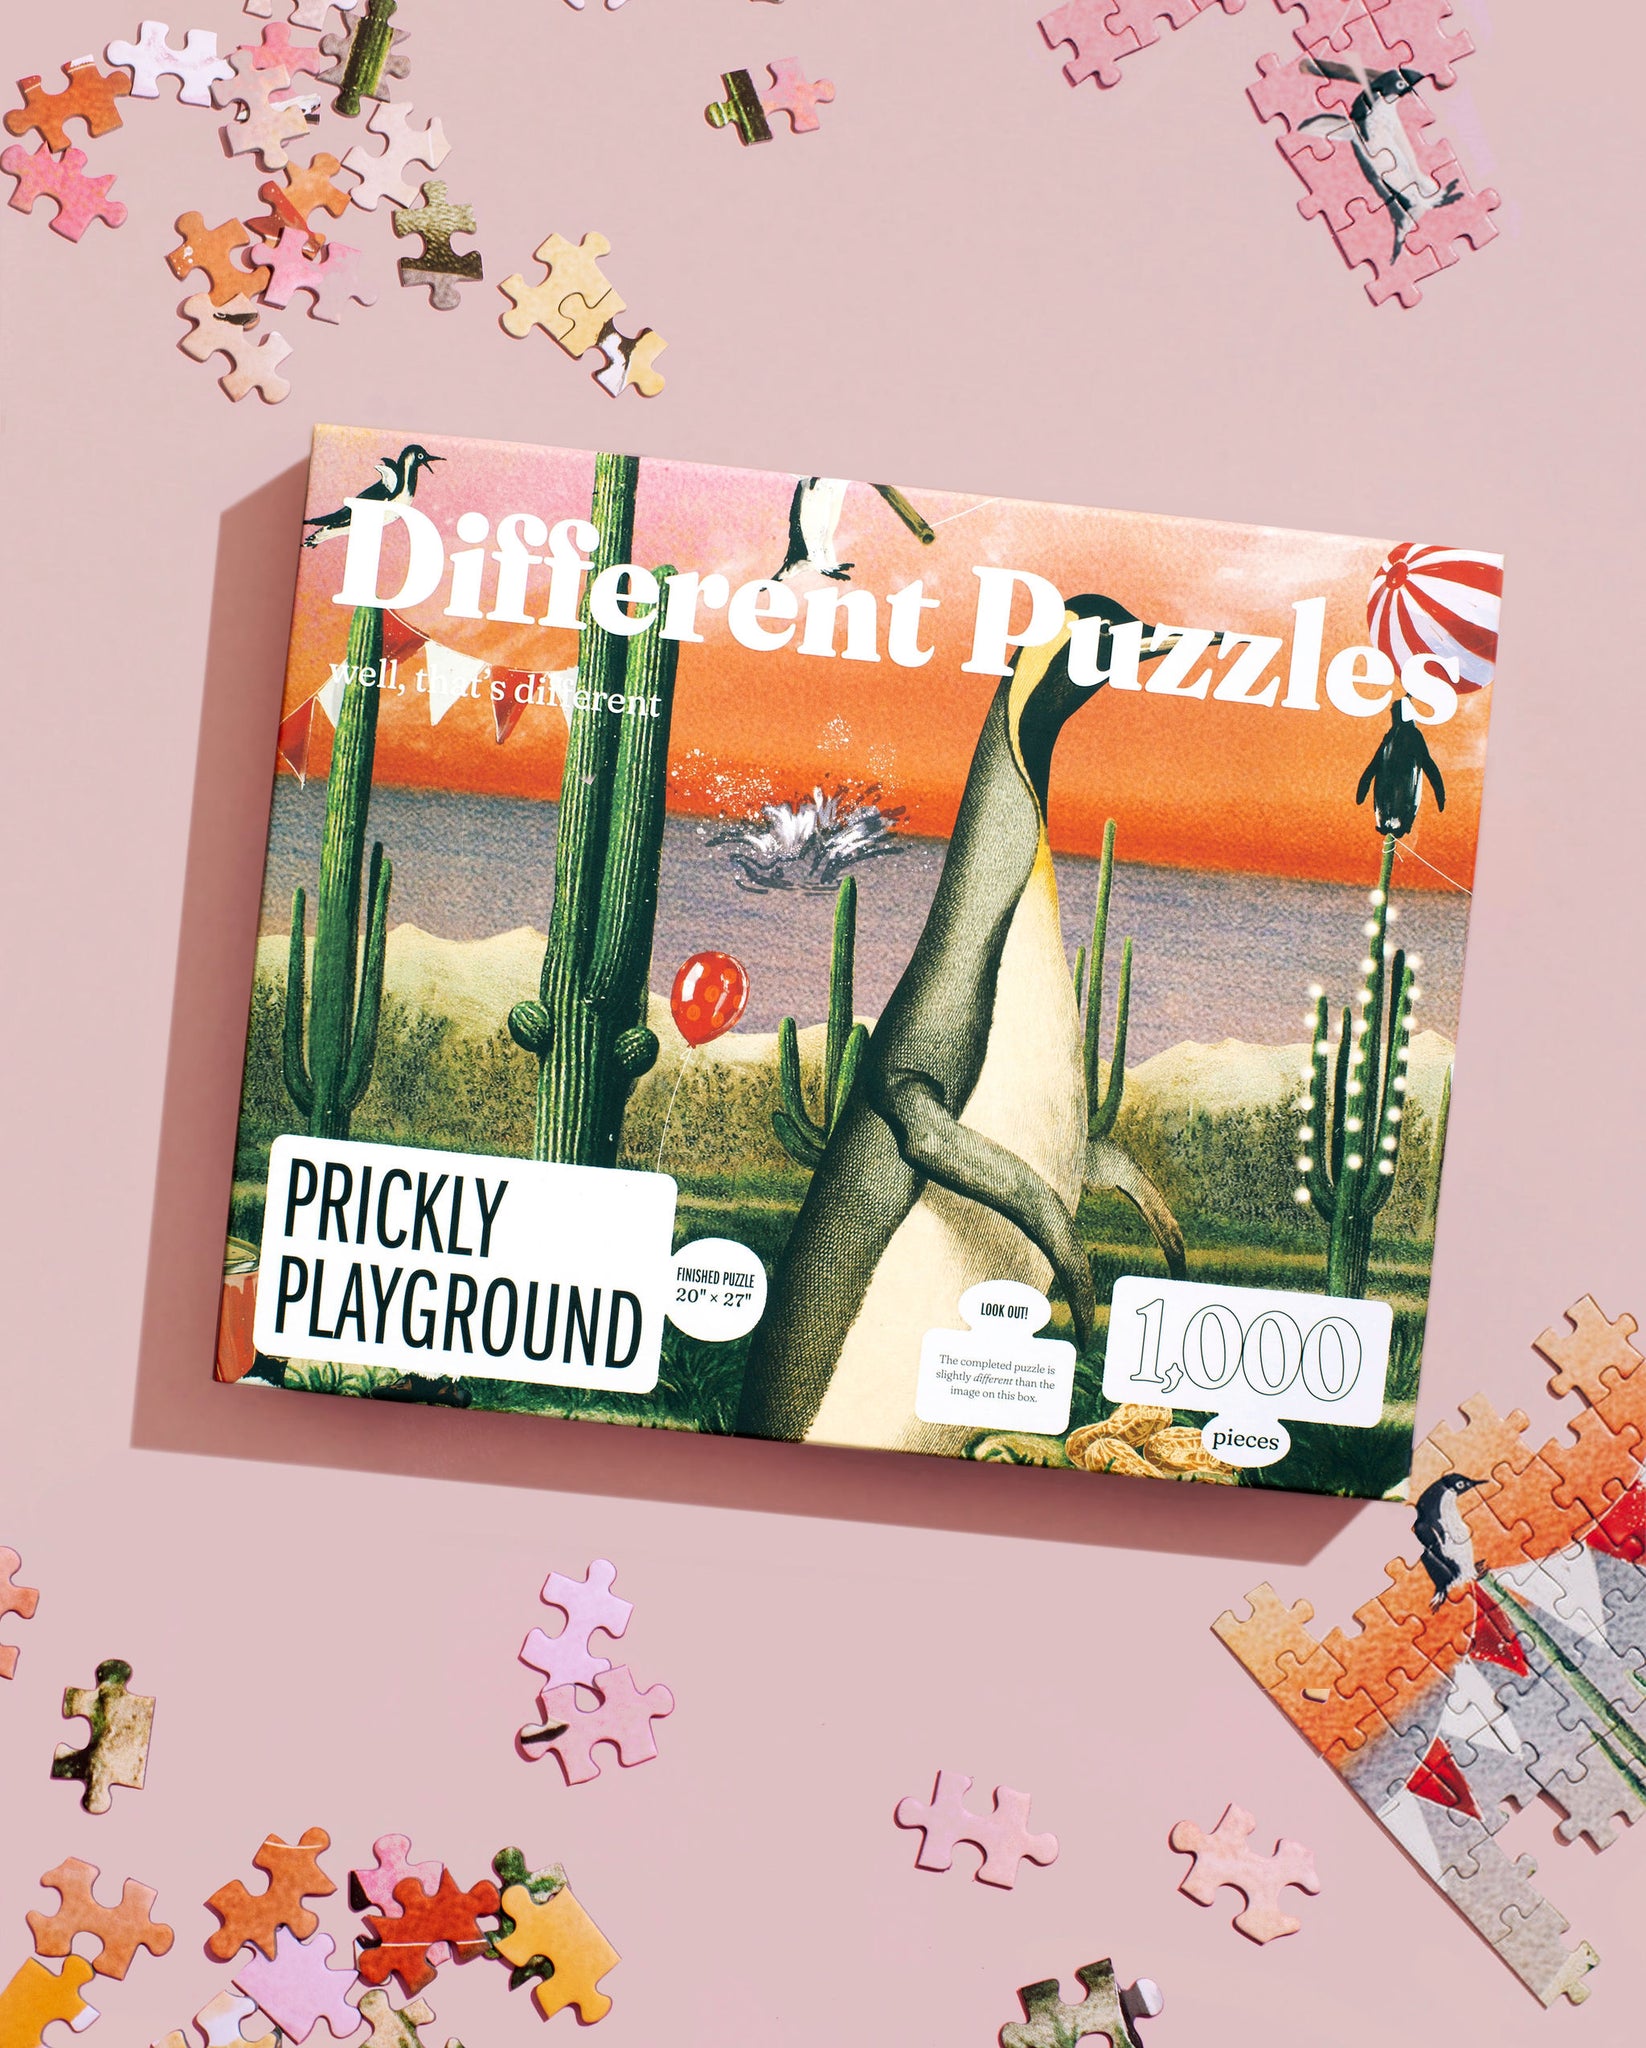 Prickly Playground – 1,000 pieces